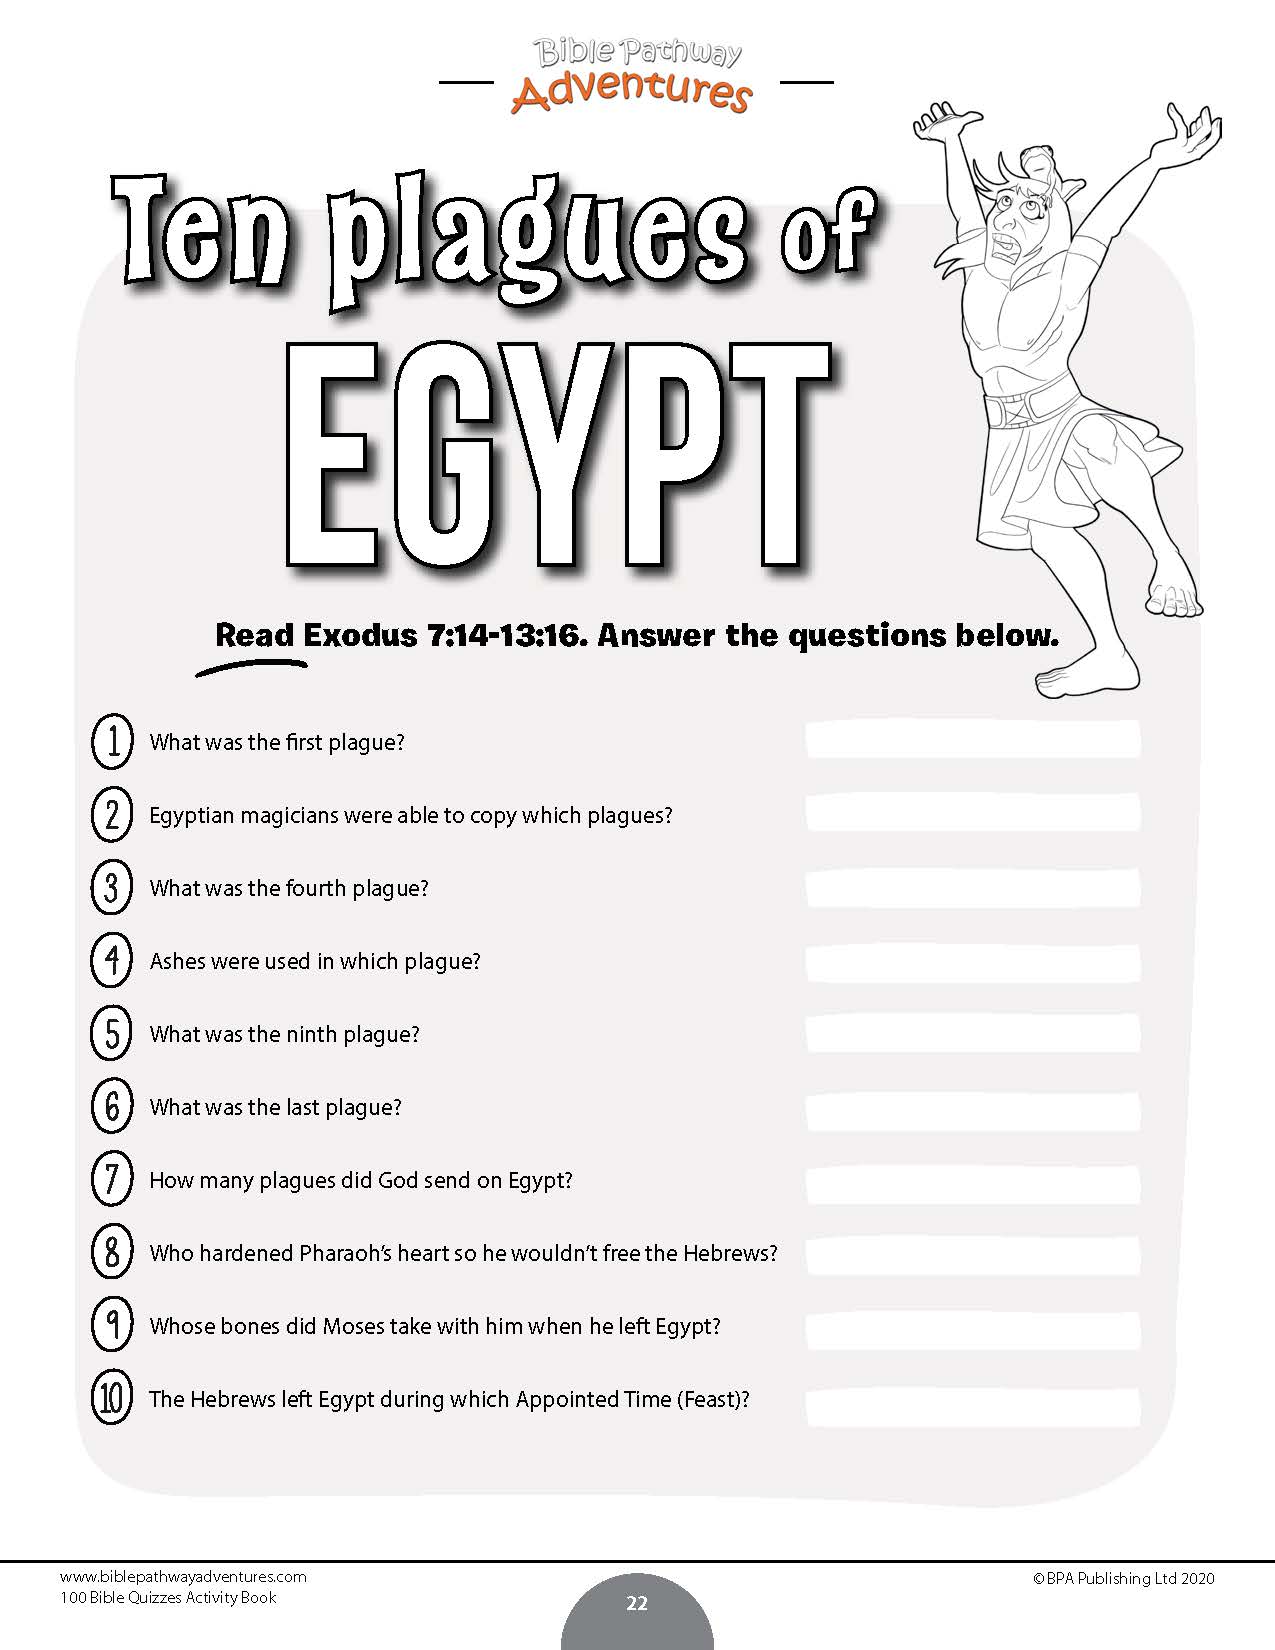 Ten Plagues of Egypt bible quiz